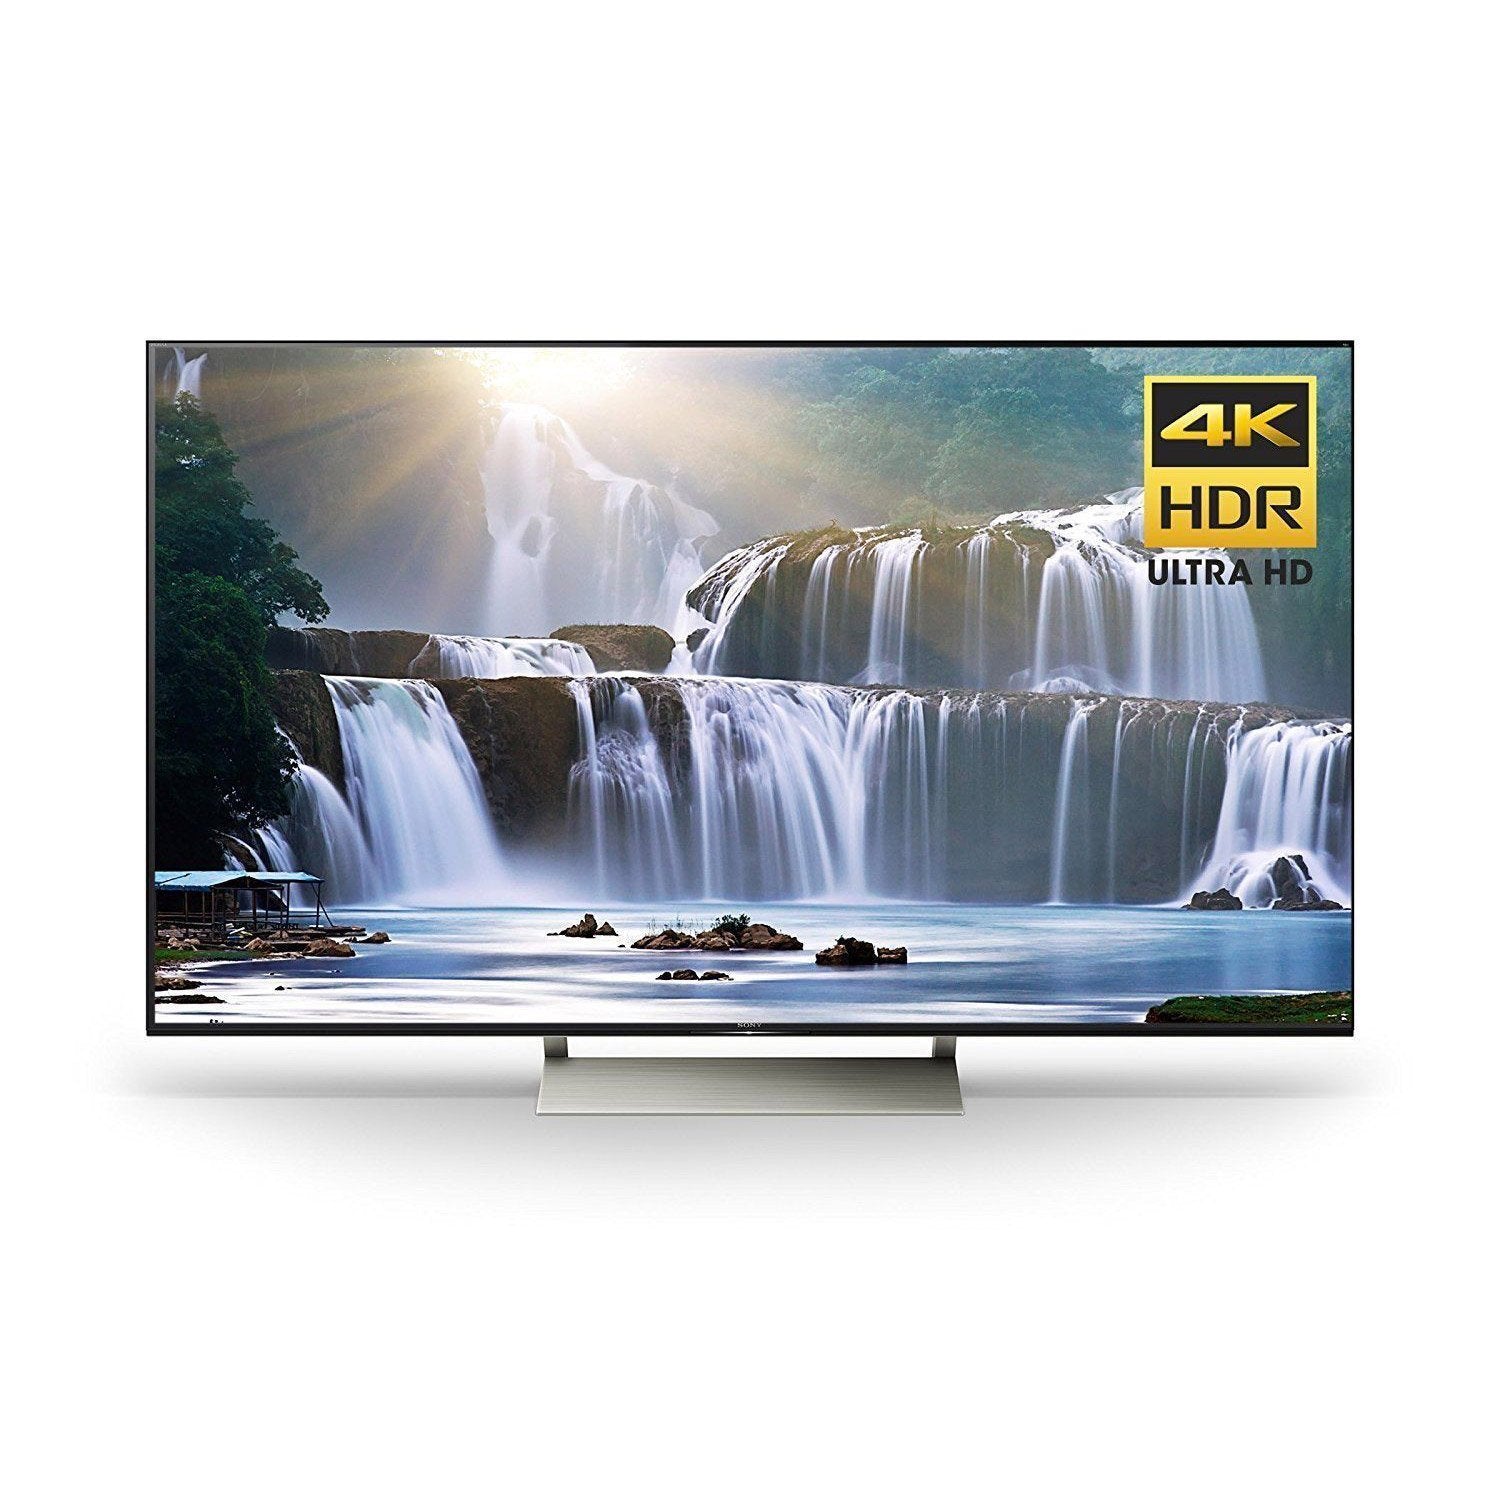 Sony XBR-55X930E 55-Inch 4K Ultra HD Smart LED TV, Works with Alexa